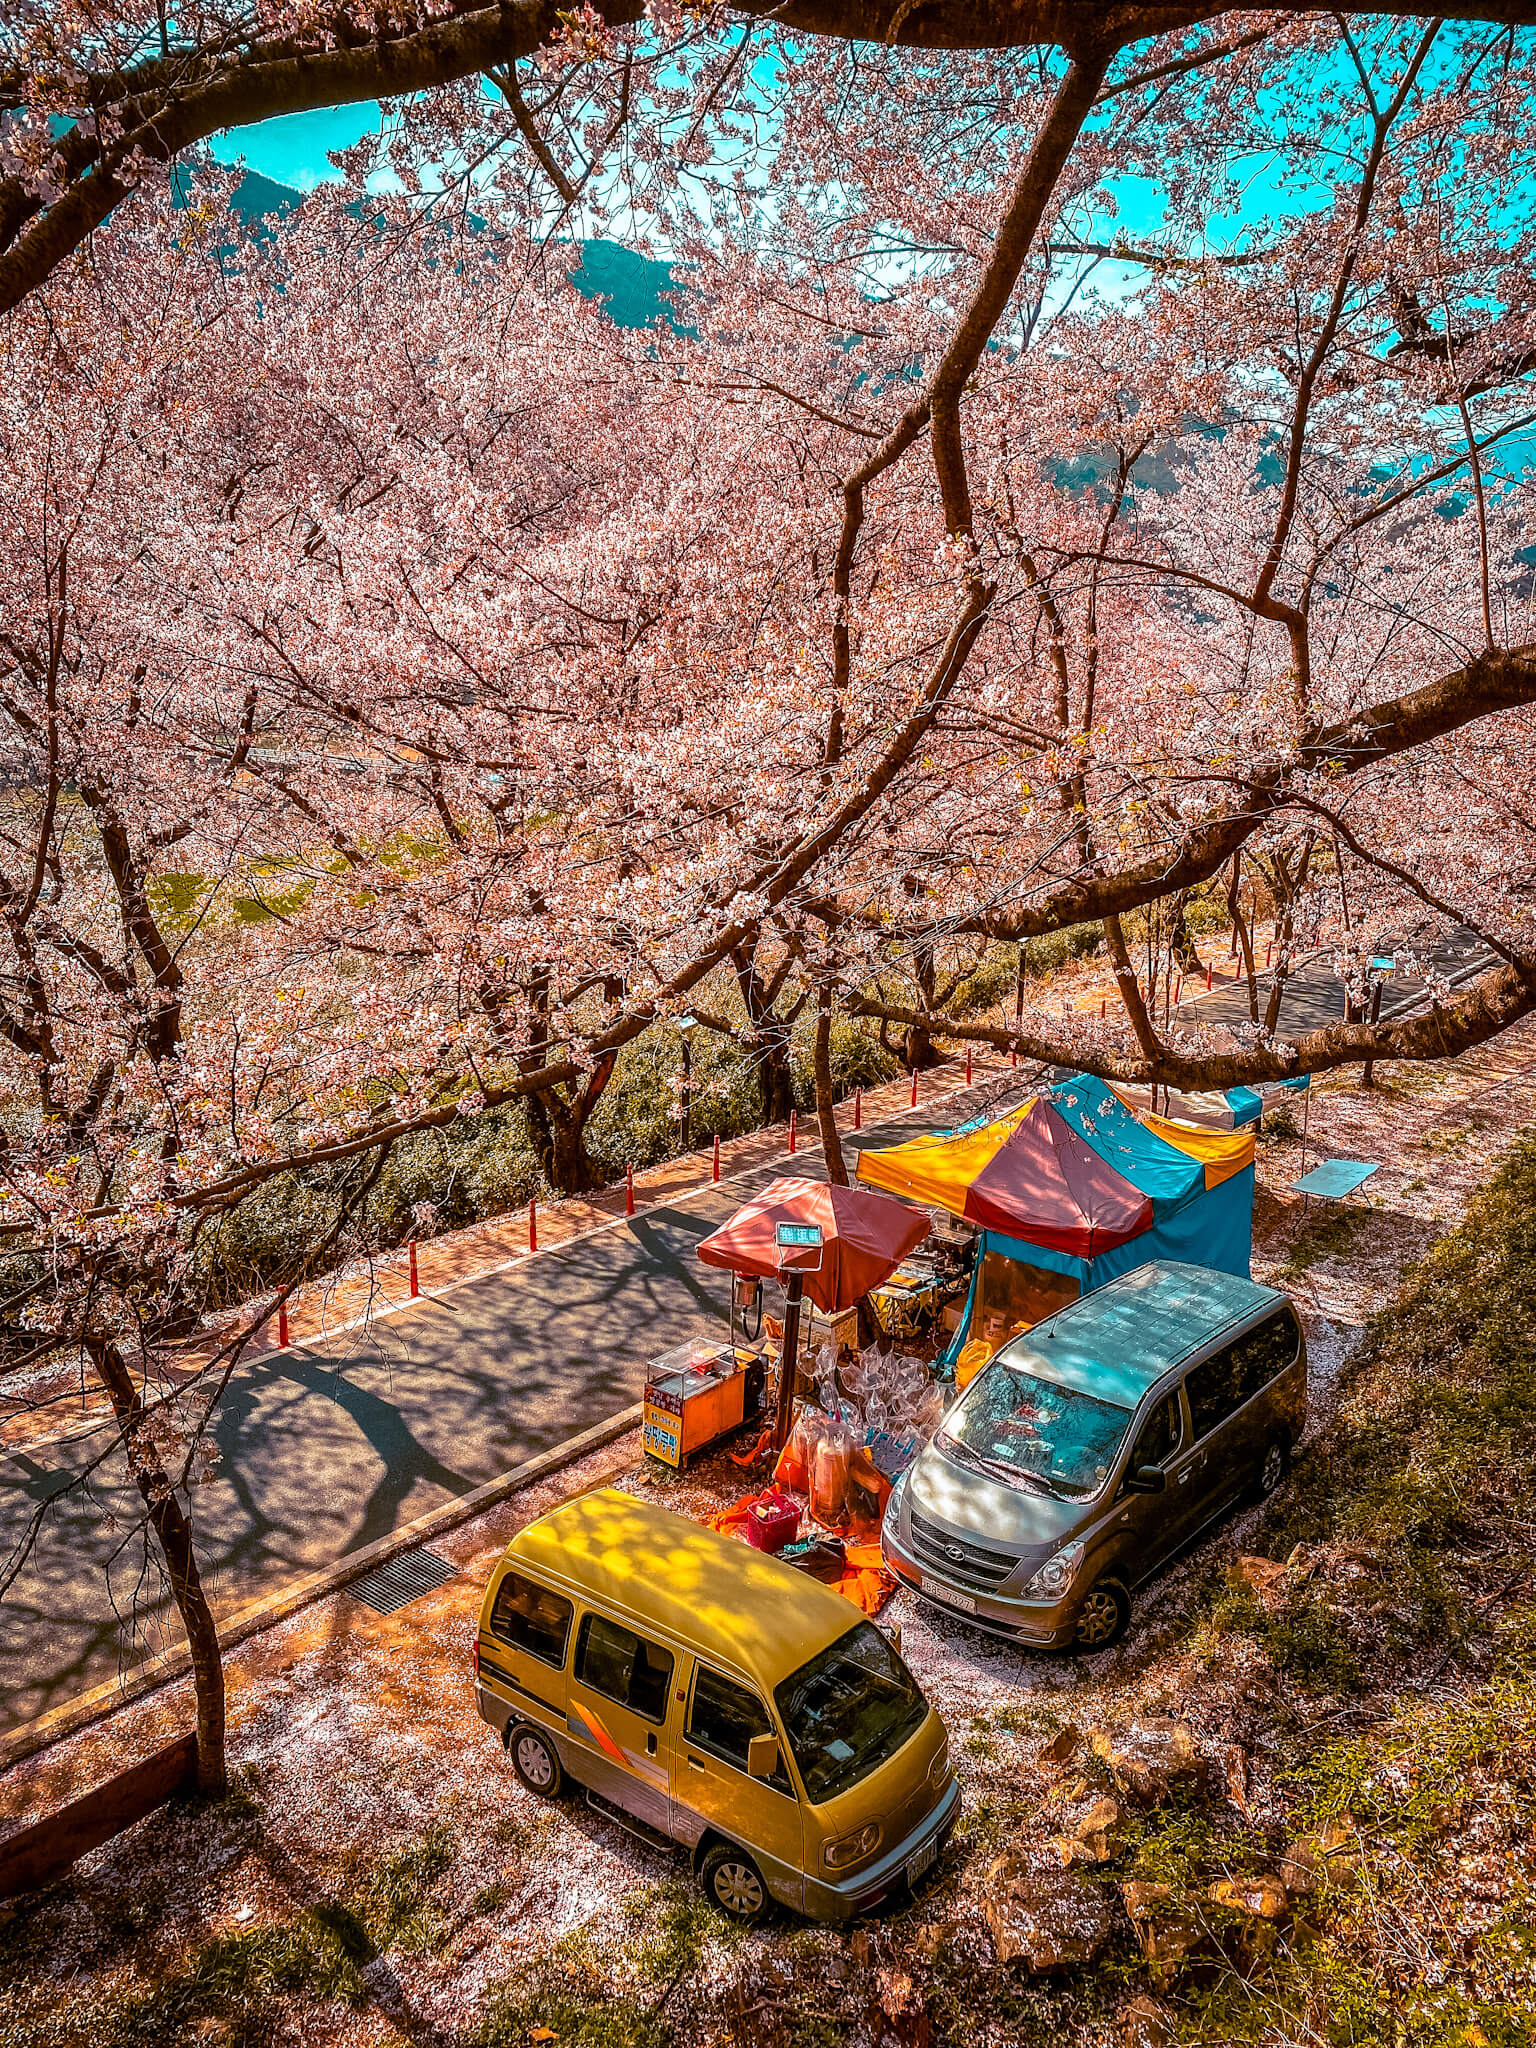 cherry blossoms in korea | hwagae 10-ri road